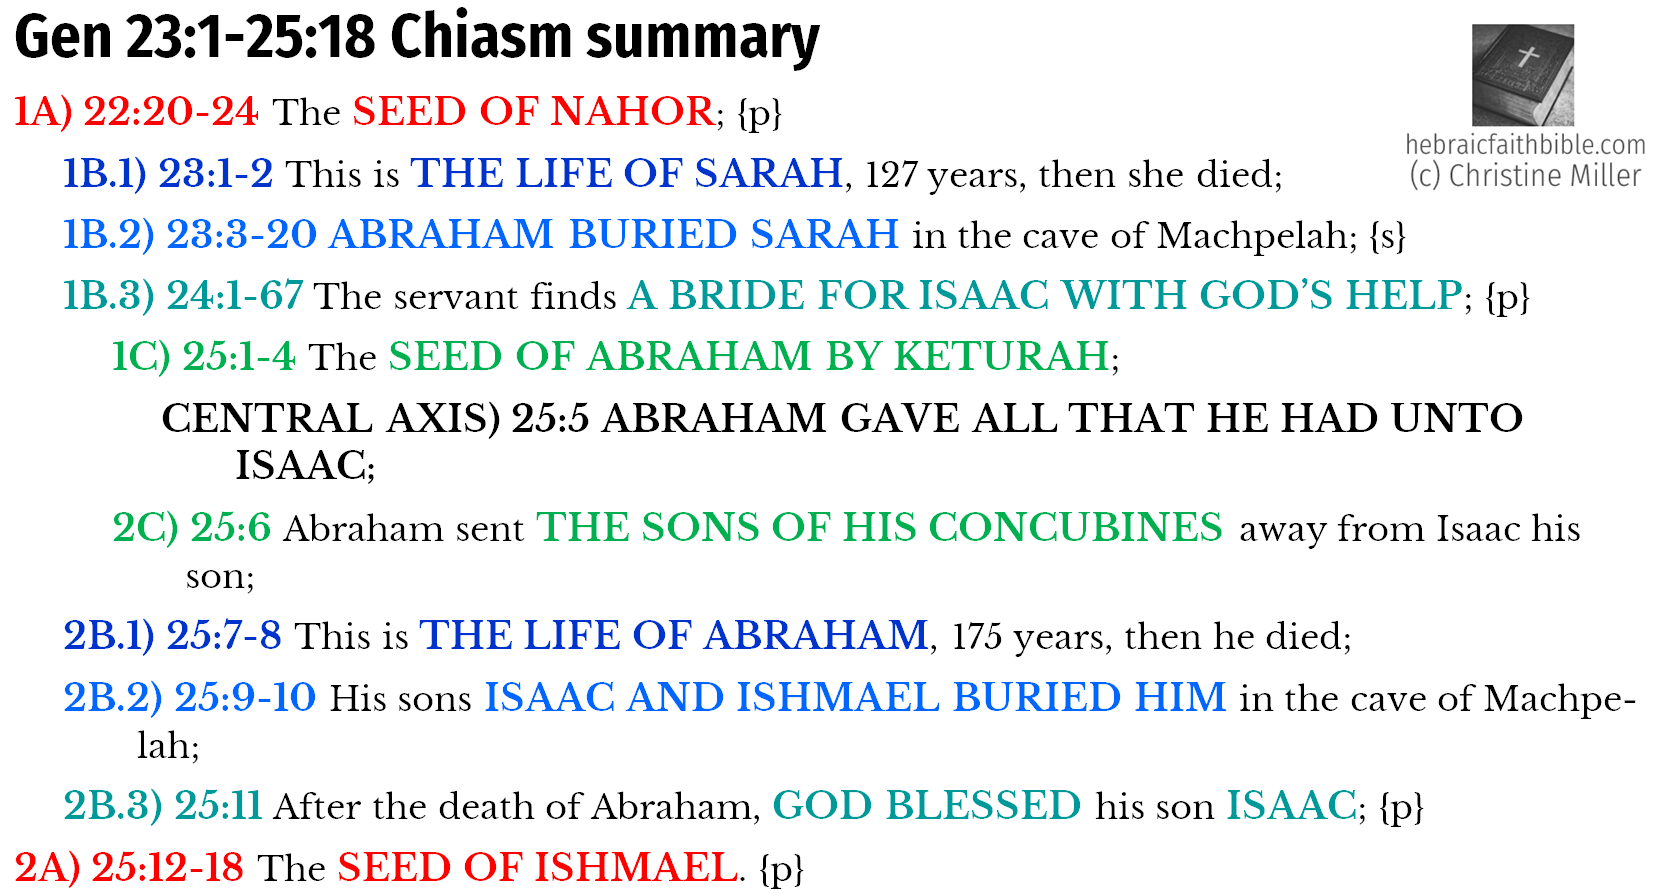 Gen 23:1-25:18 Chayei Sarah Chiasm Summary | hebraicfaithbible.com